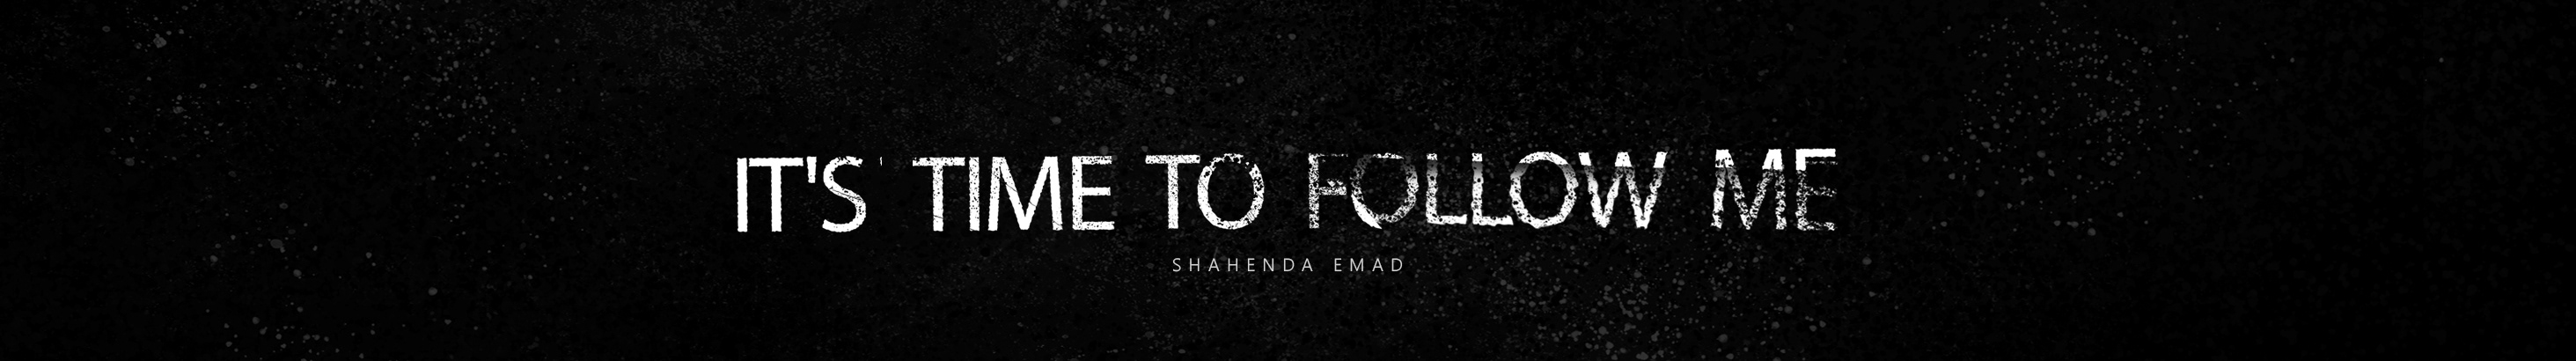 Shahenda Emad El-deen's profile banner